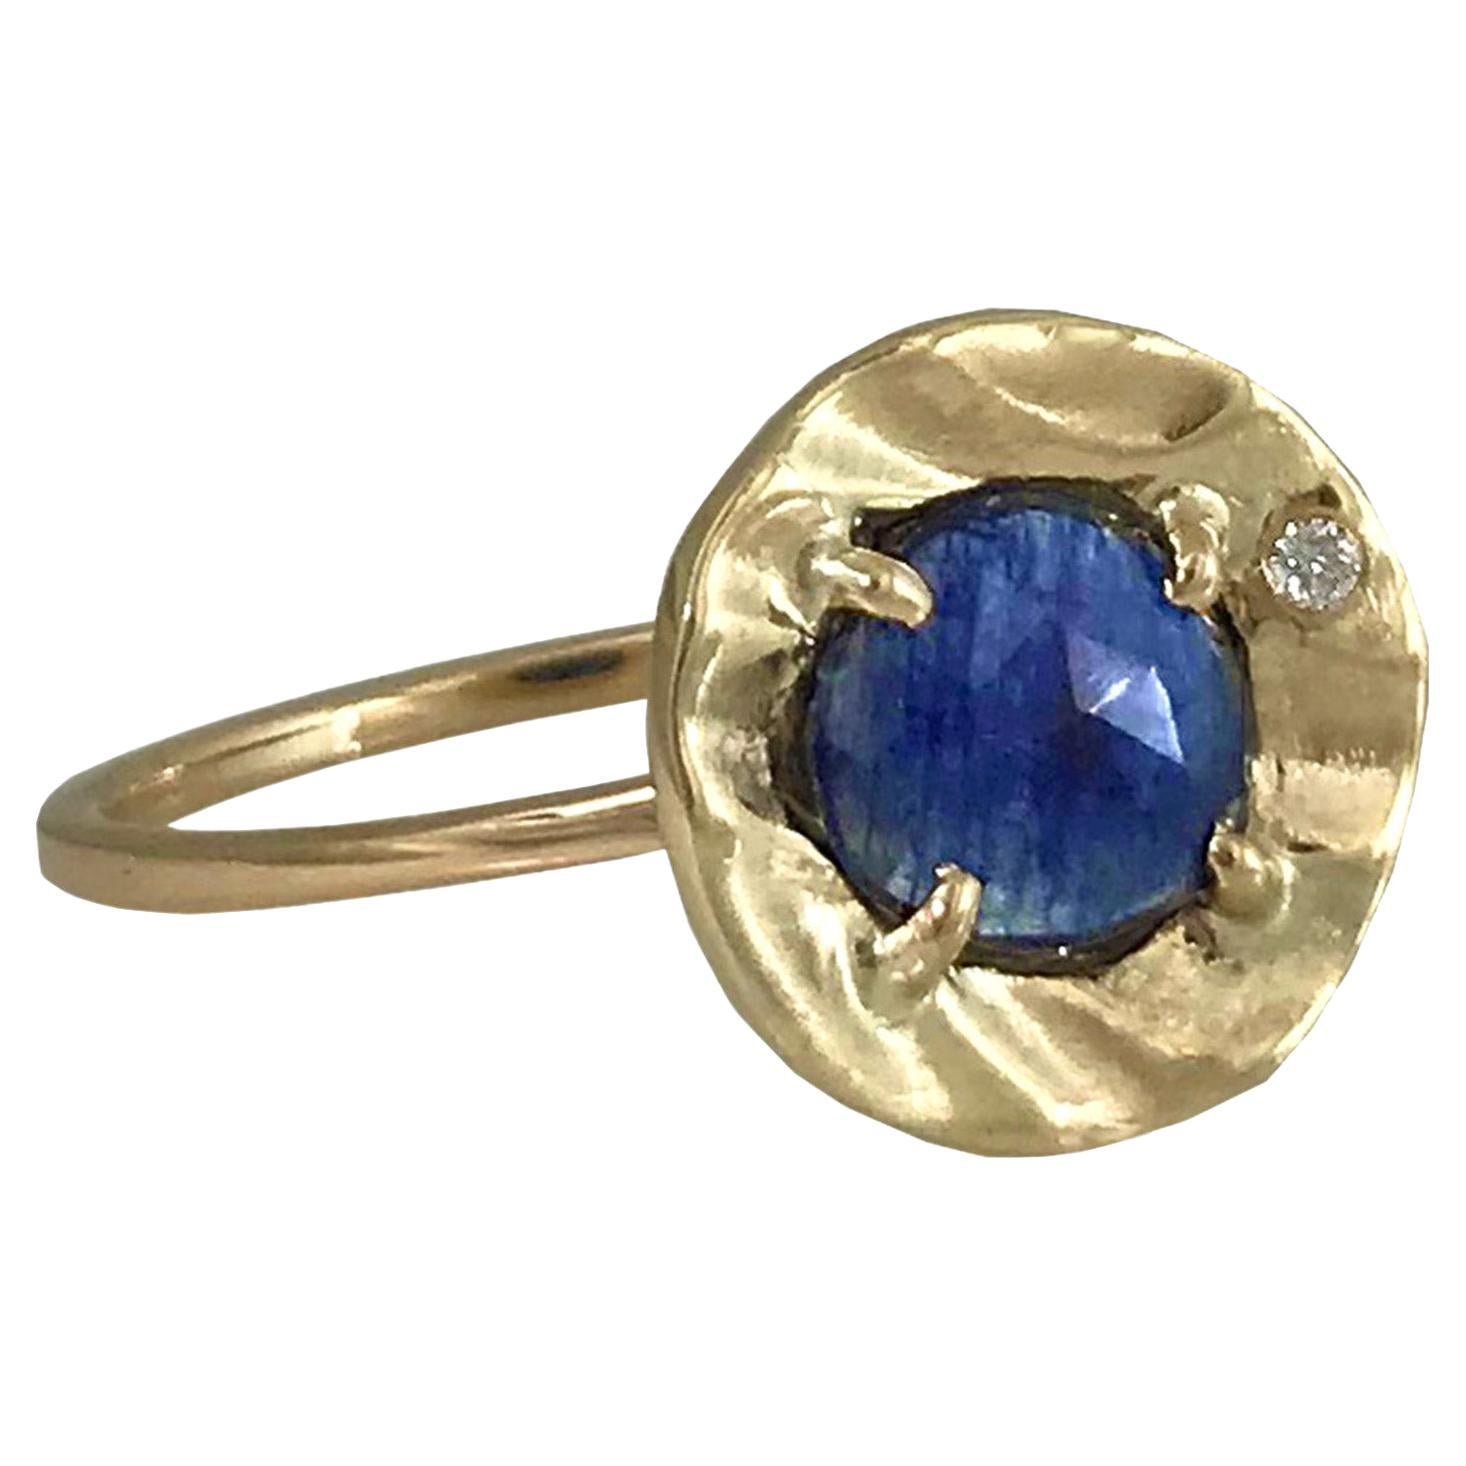 14 Karat Yellow Gold Petite Pebble Ring with Blue Sapphire from K.Mita